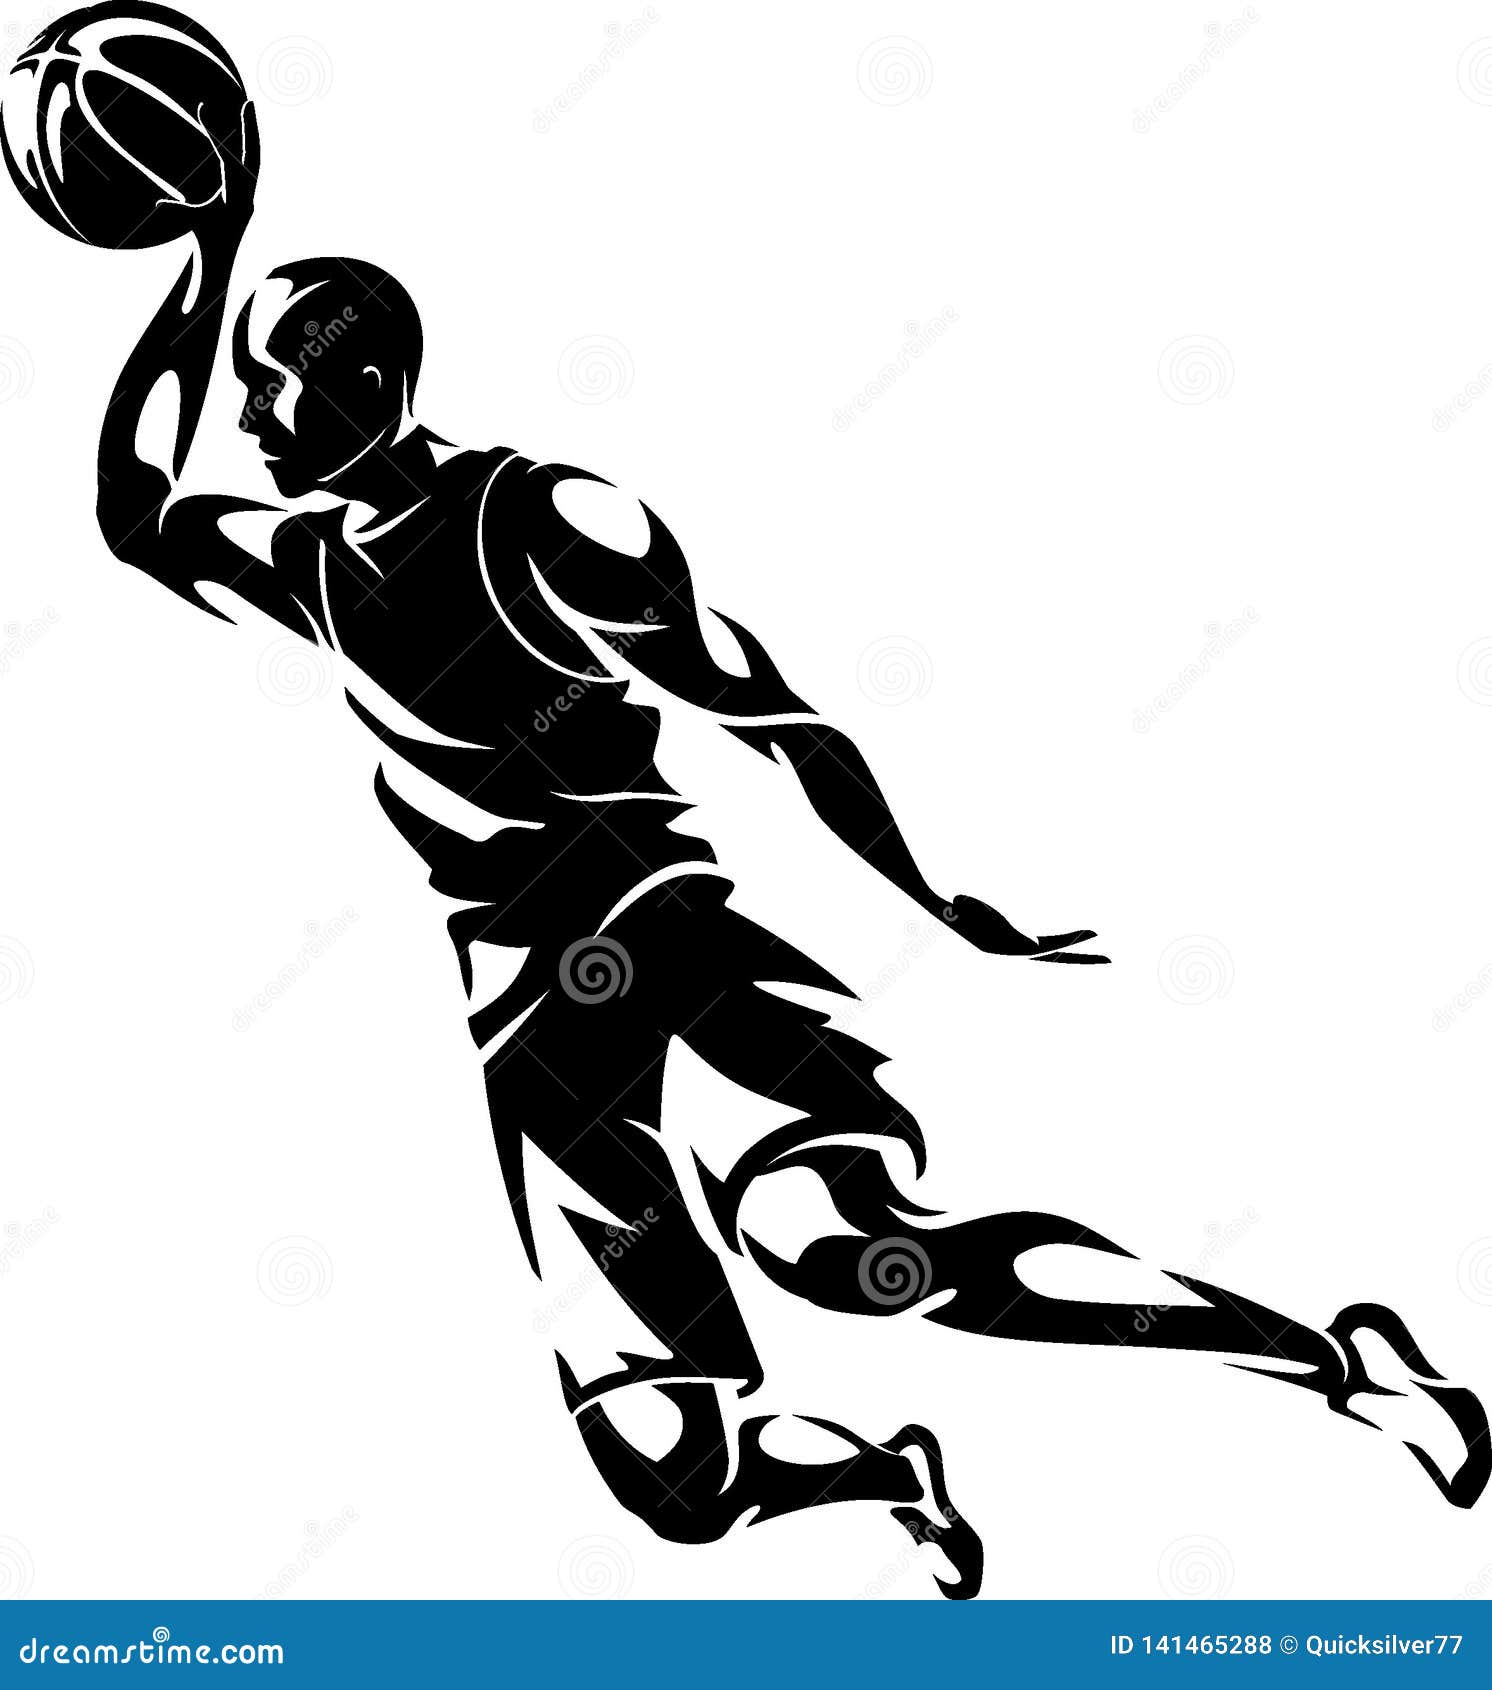 Slam Dunk Abstract stock vector. Illustration of basketball - 141465288